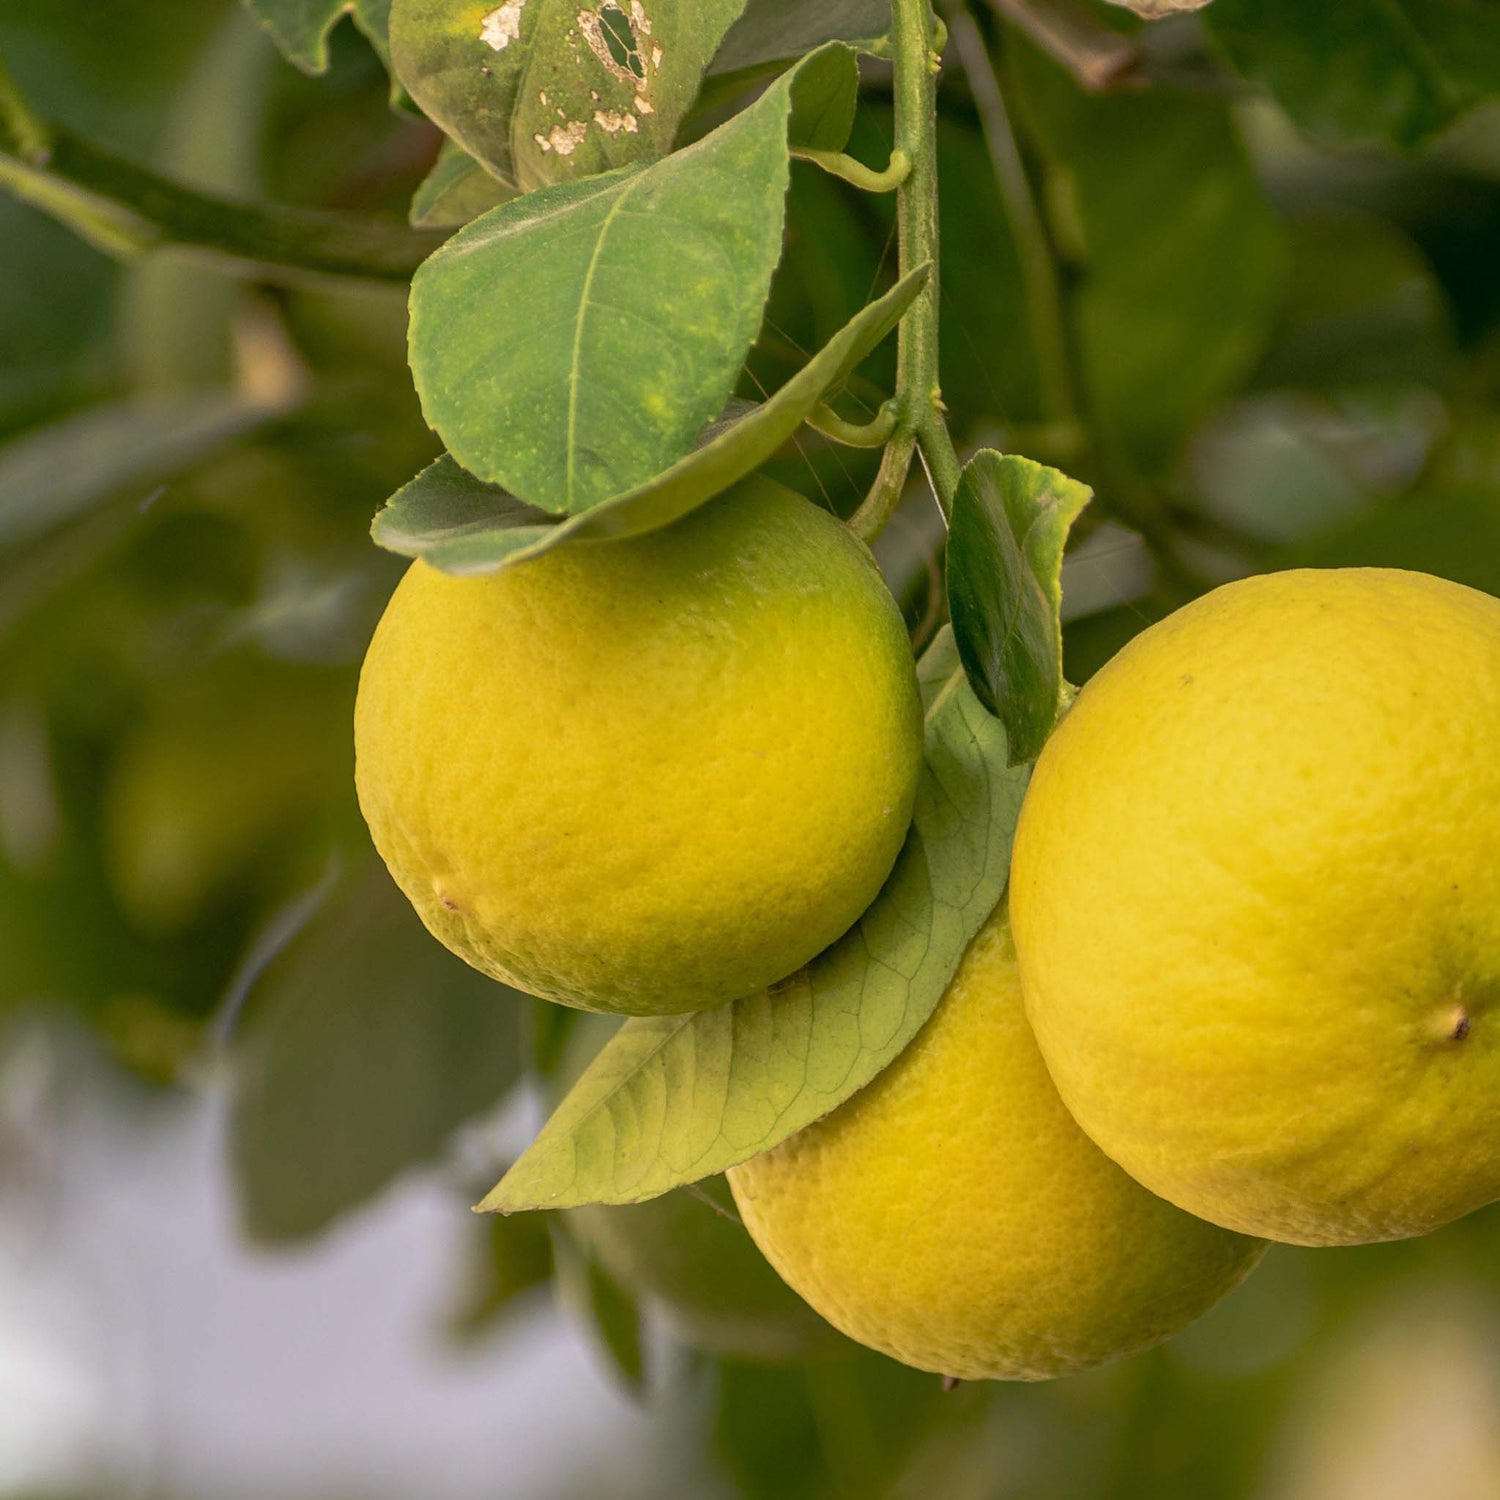 Lemons hanging on tree.